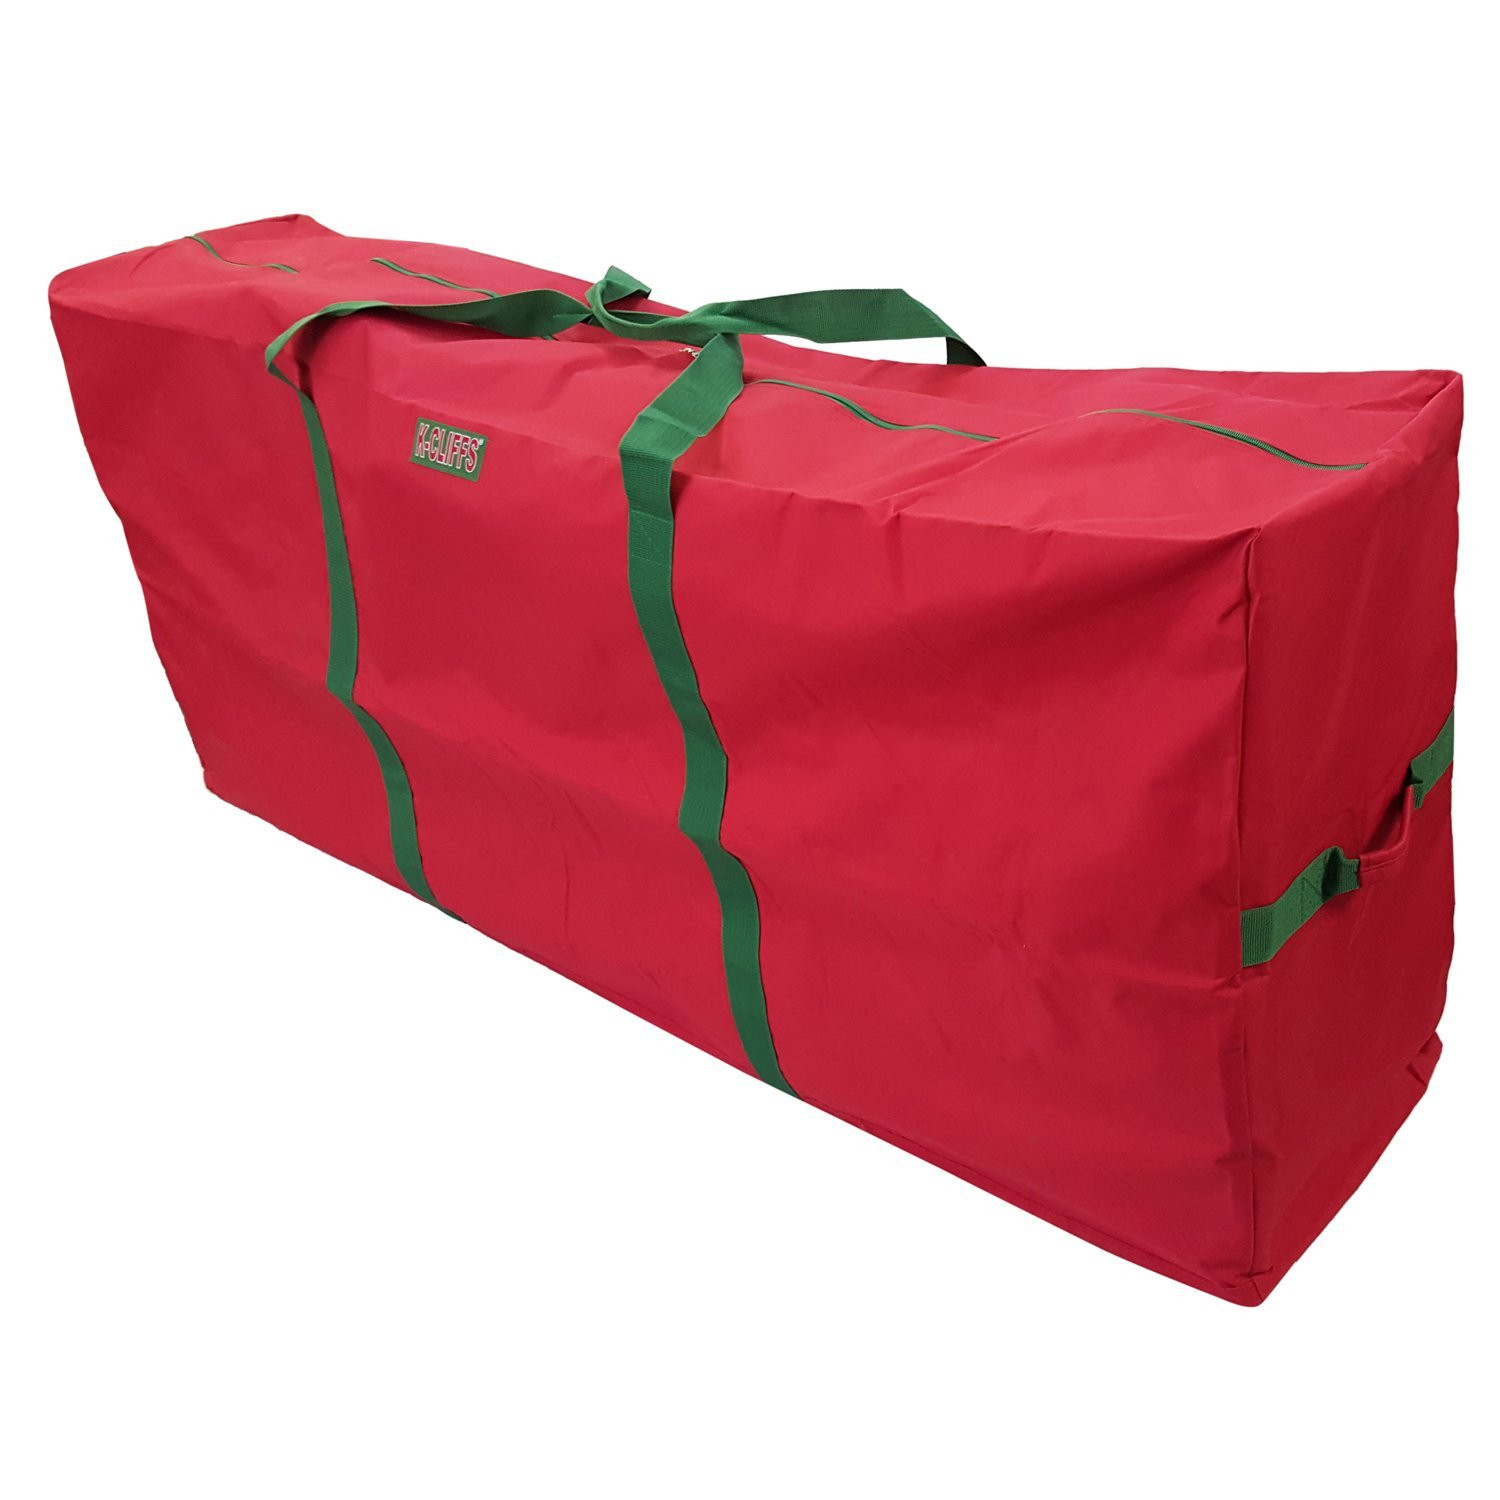 Christmas Tree Storage Bags
 Genius Ideas for Storing & Organizing Christmas Decor